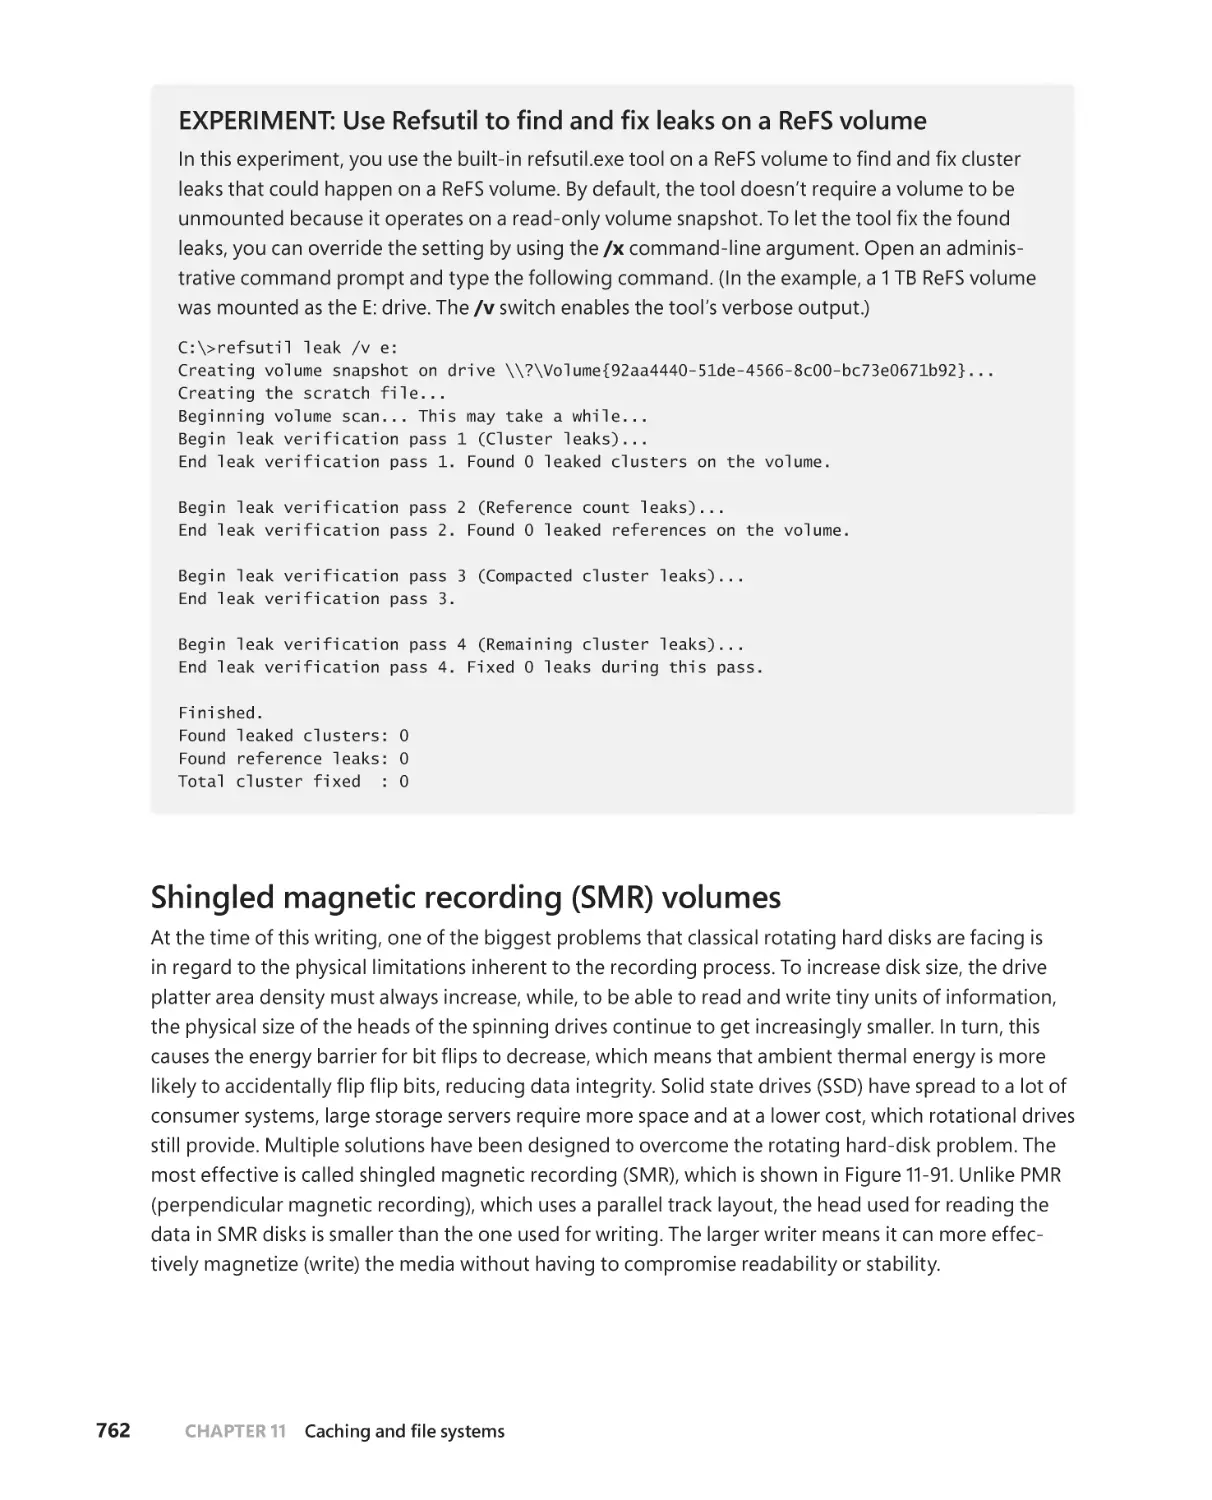 Shingled magnetic recording (SMR) volumes